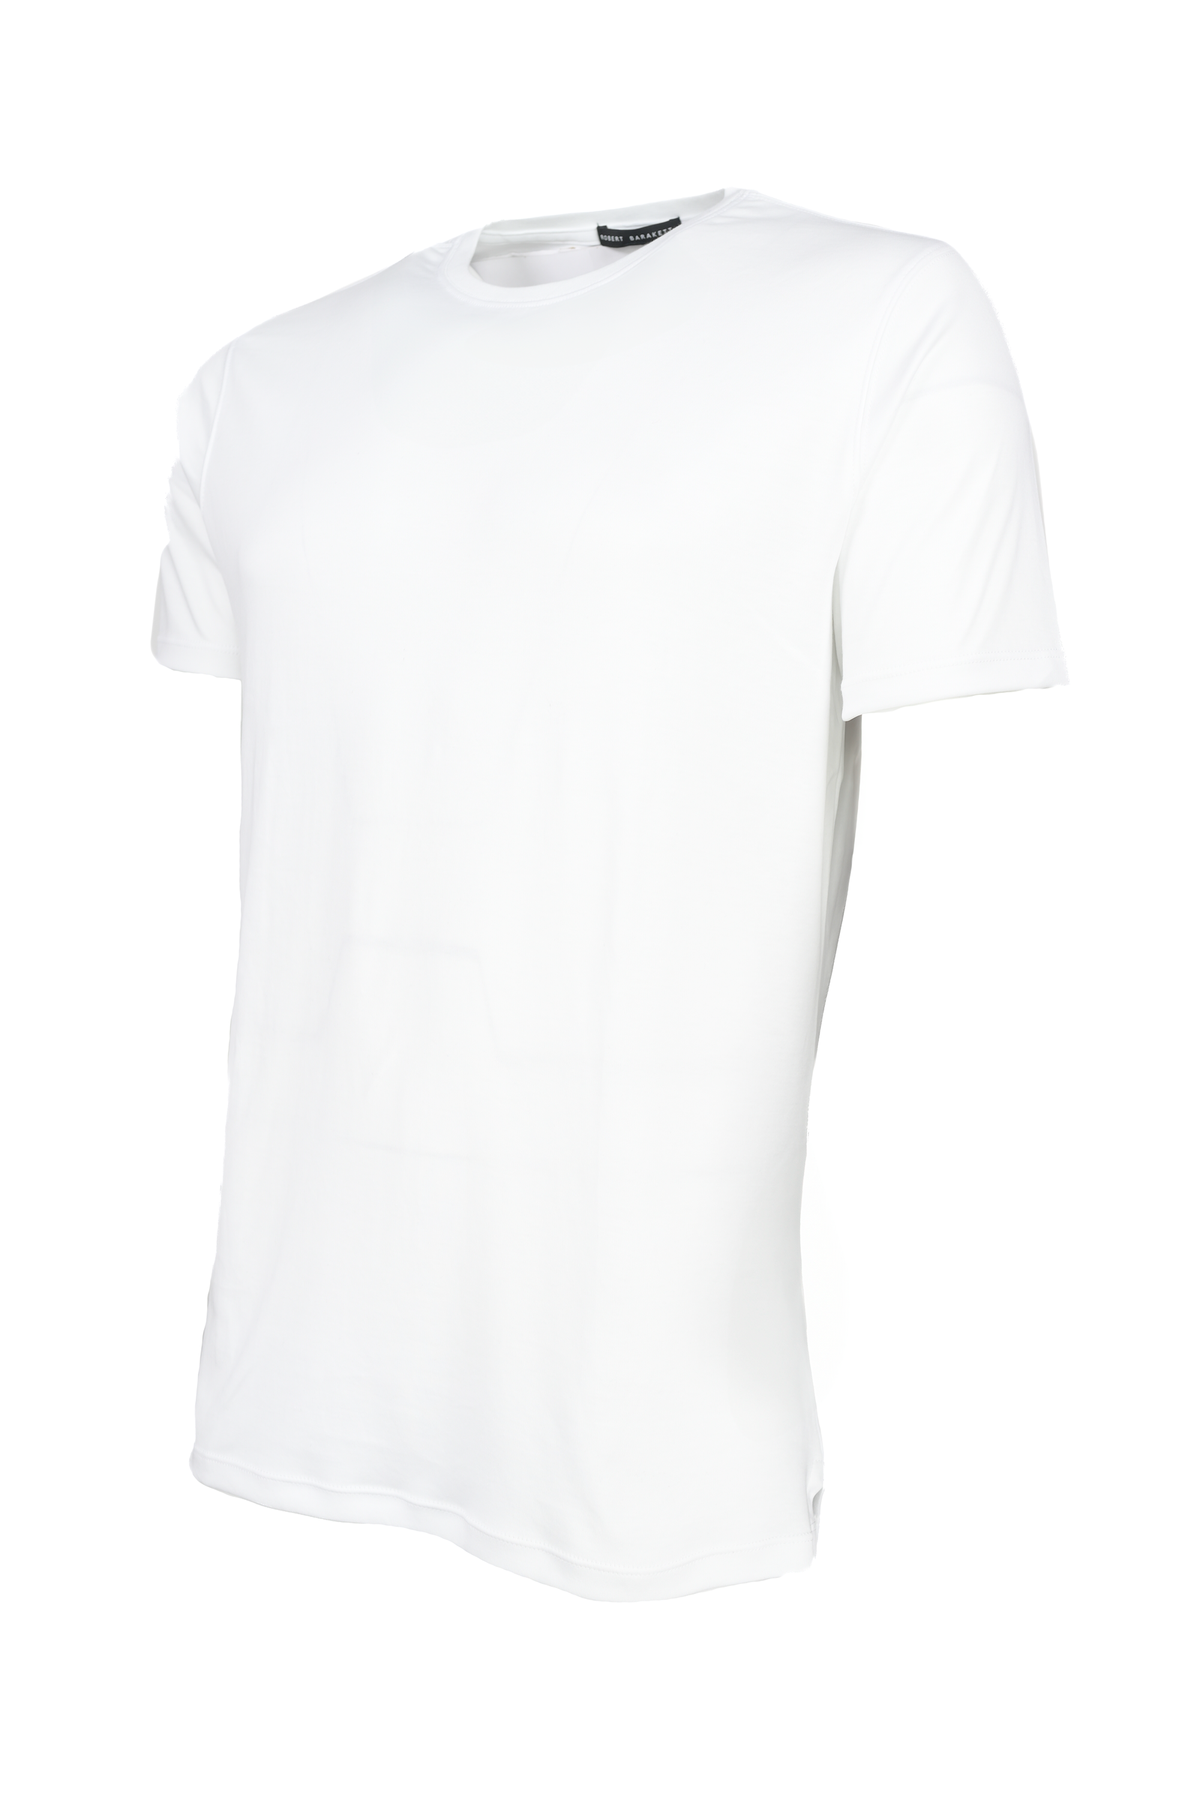 Robert Barakett T-Shirt White